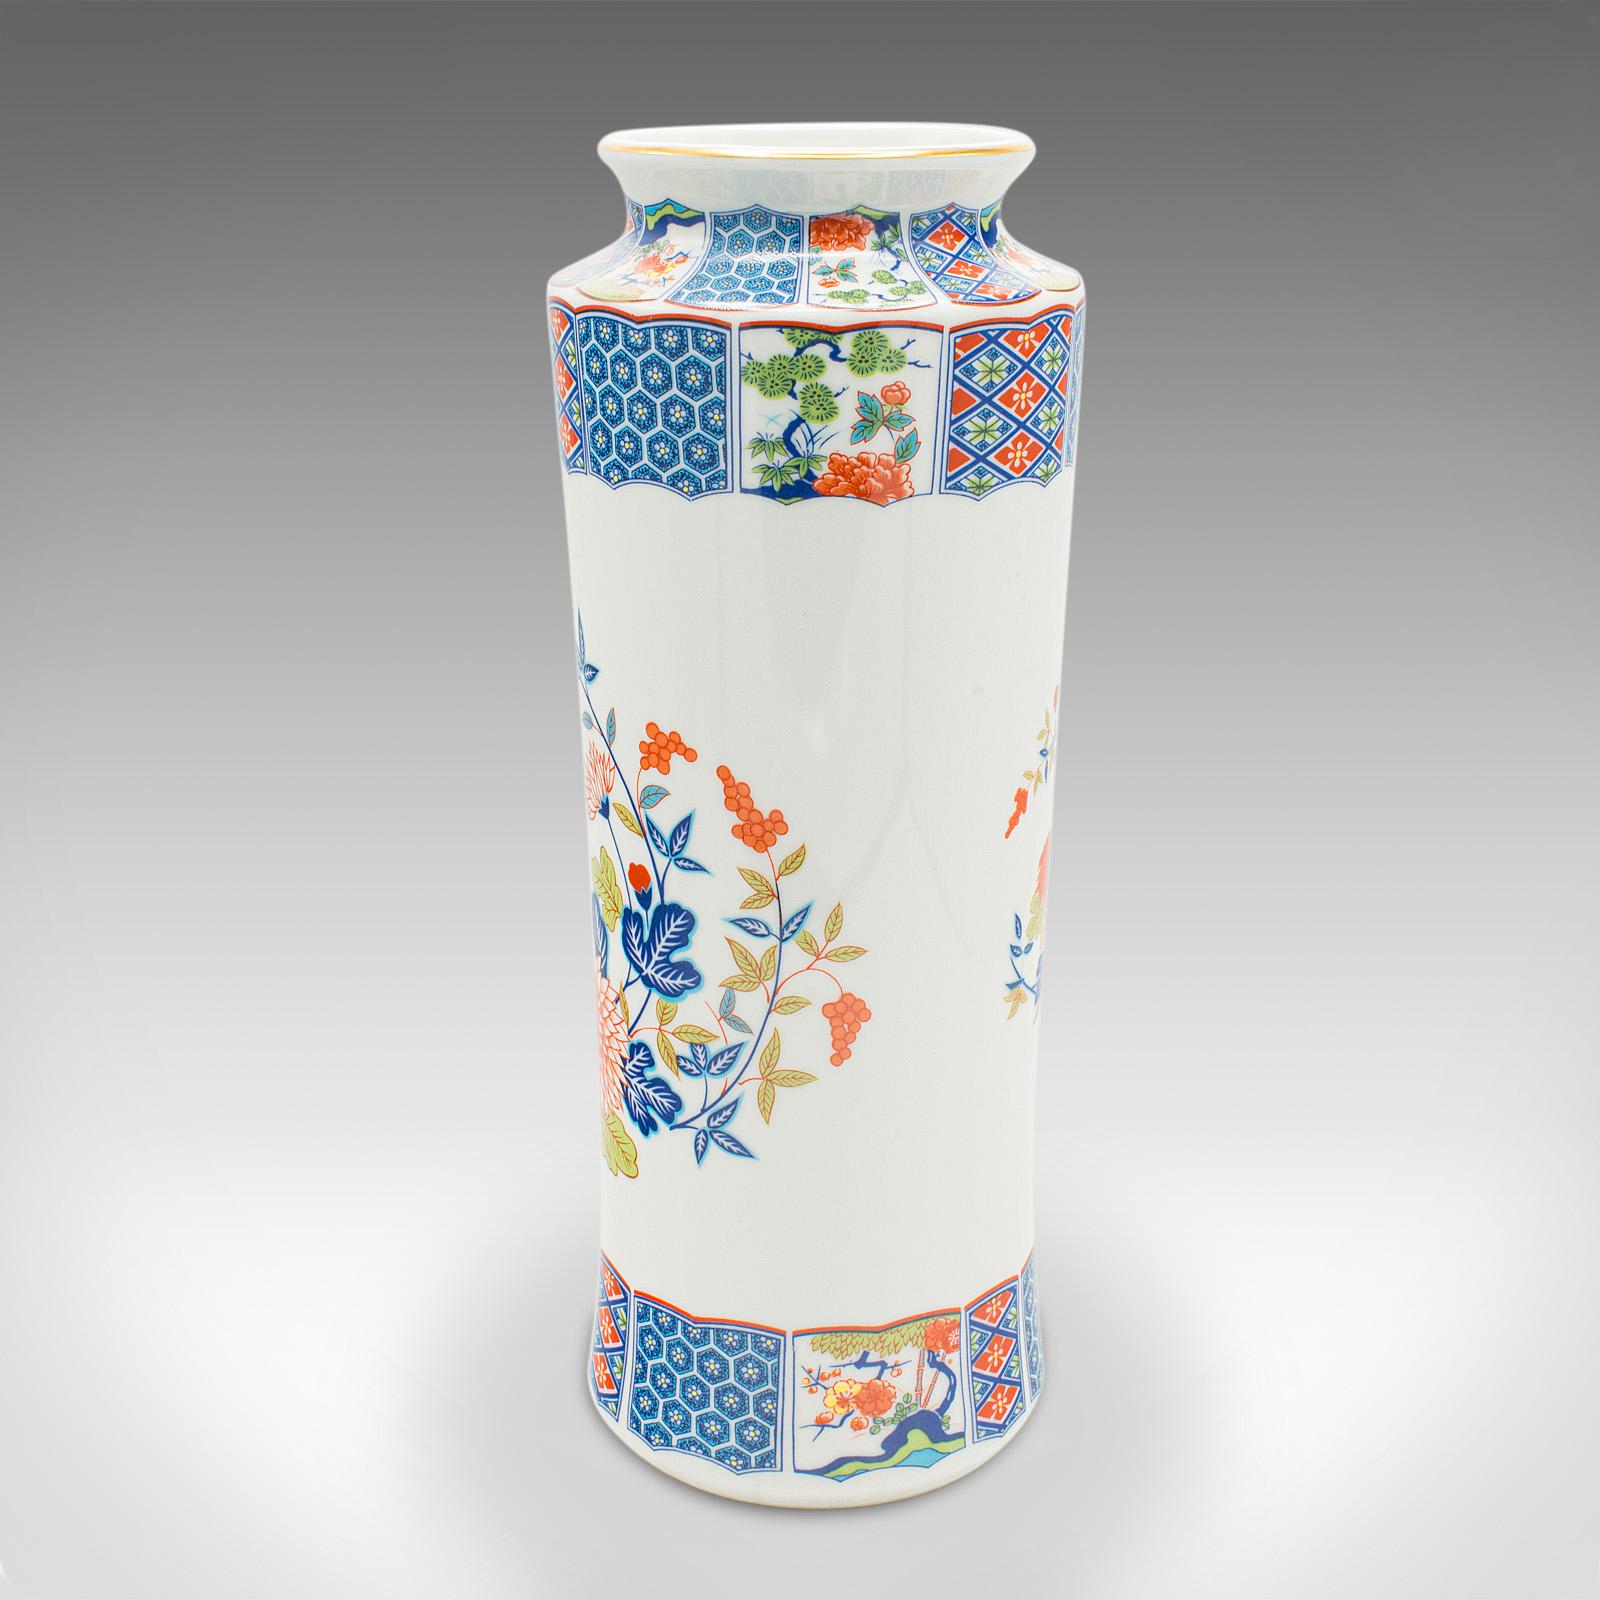 20th Century Vintage Decorative Stem Vase, Chinese, Ceramic, Flower Sleeve, Art Deco Revival For Sale